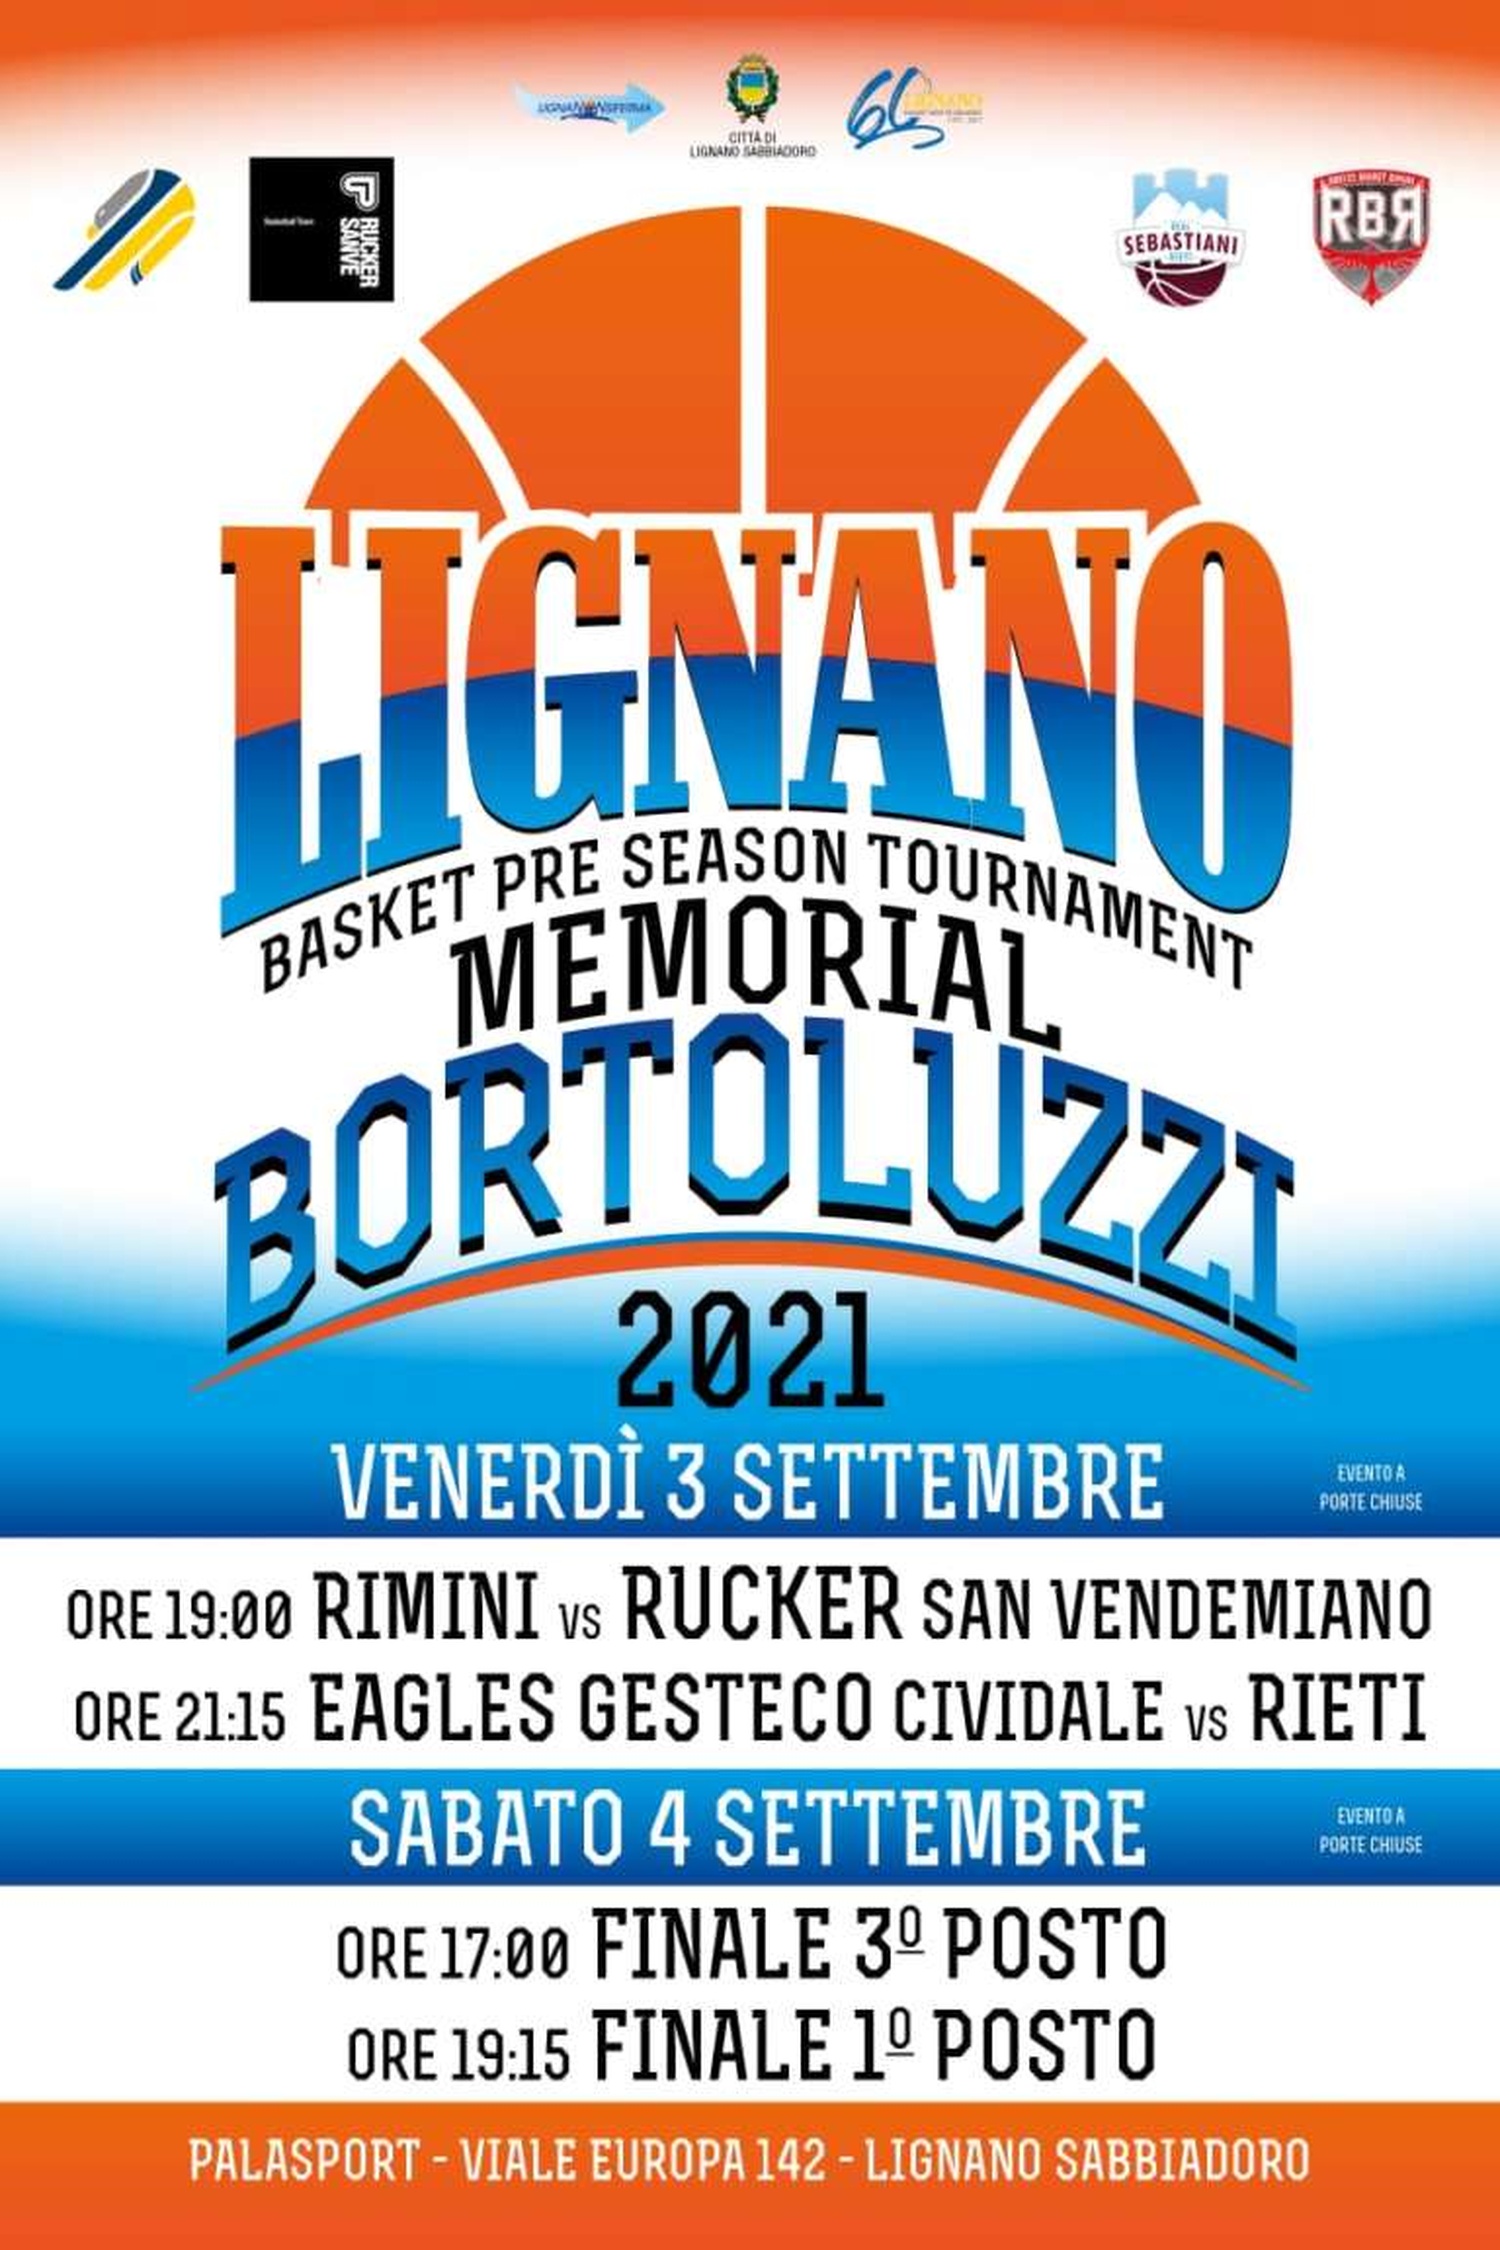 Fotos vonMemorial Bortoluzzi - Basket pro season tournament